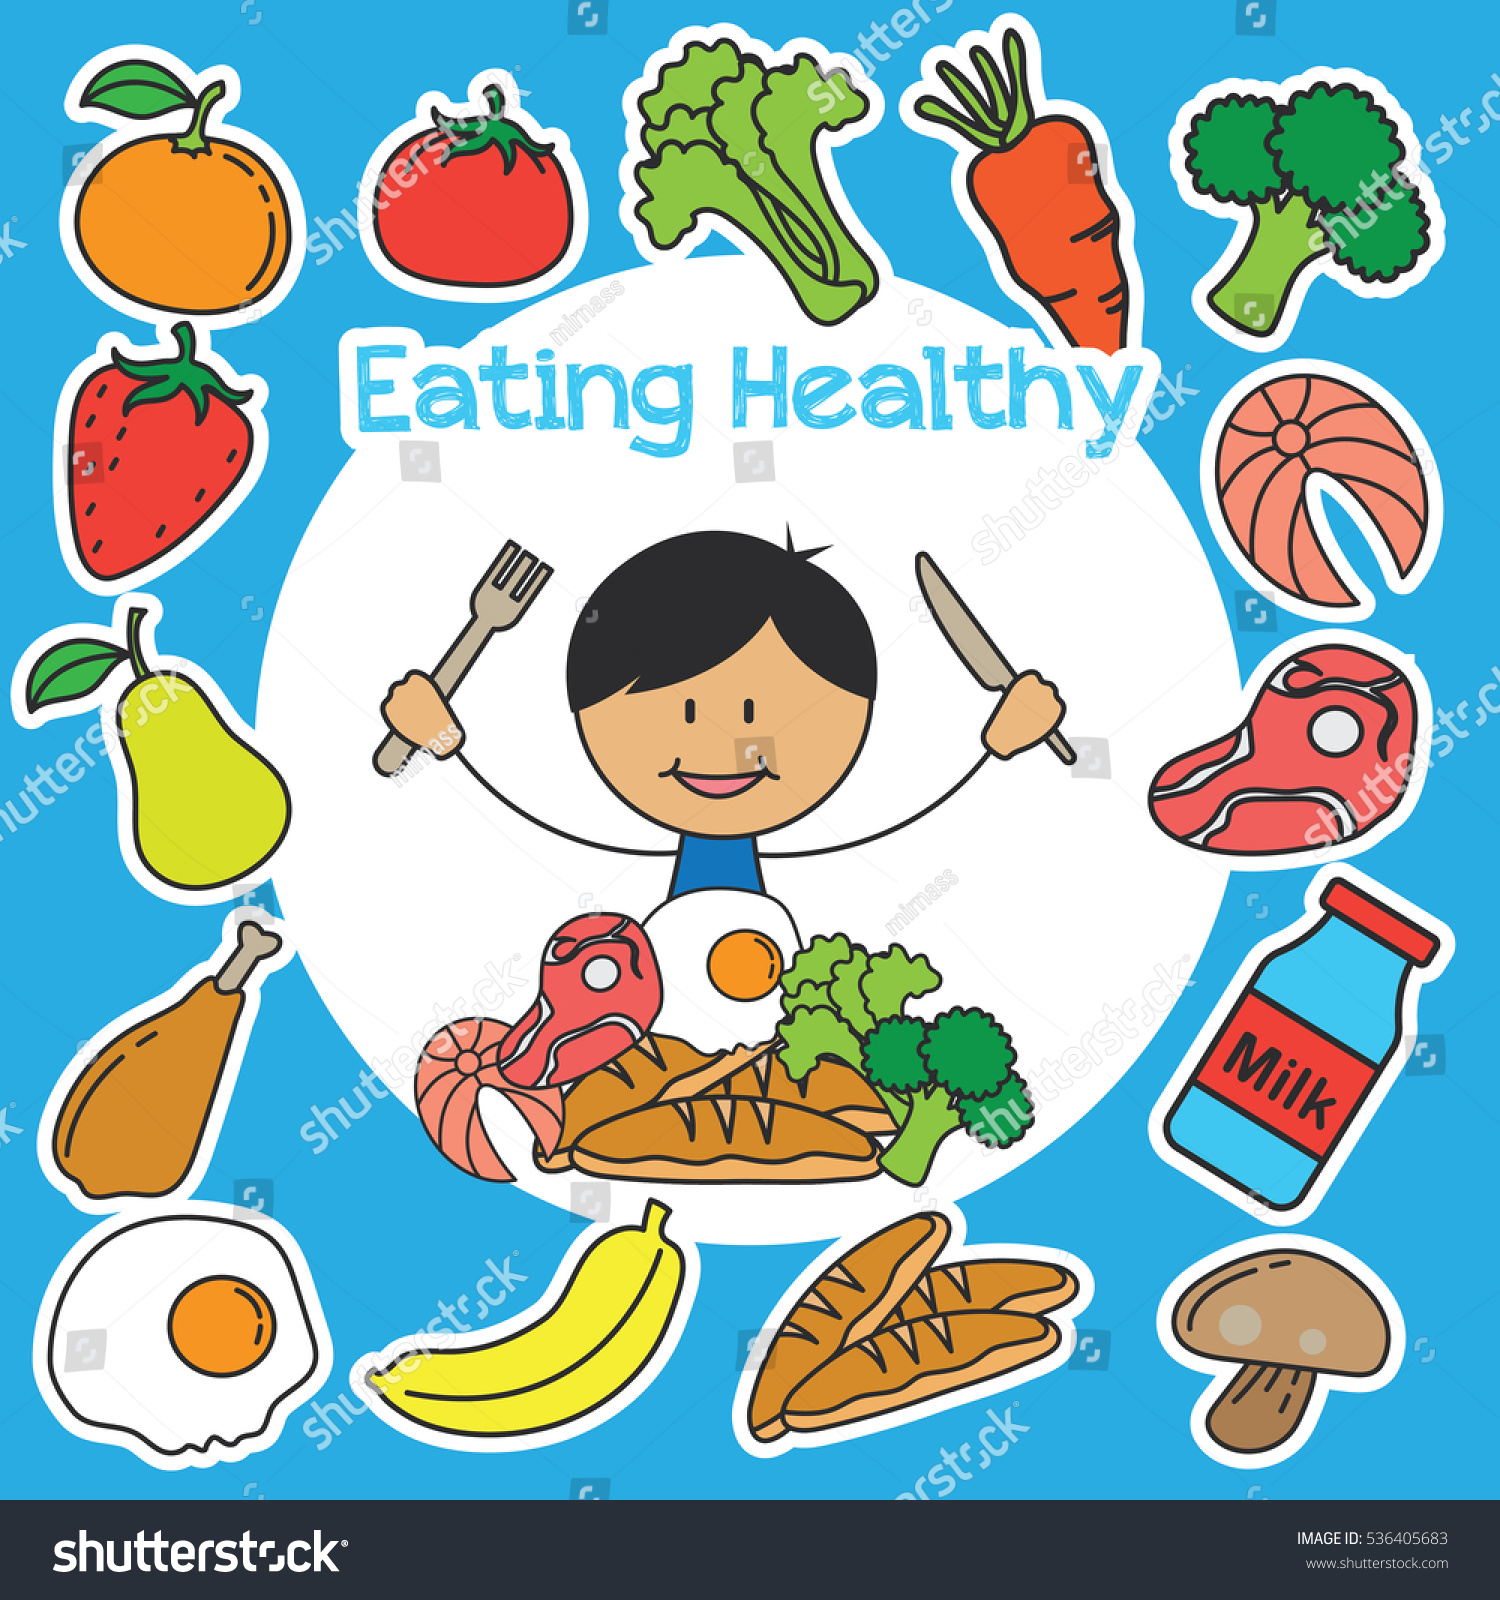 Eating Healthy Kids Campaign Poster: vector de stock (libre de regalías